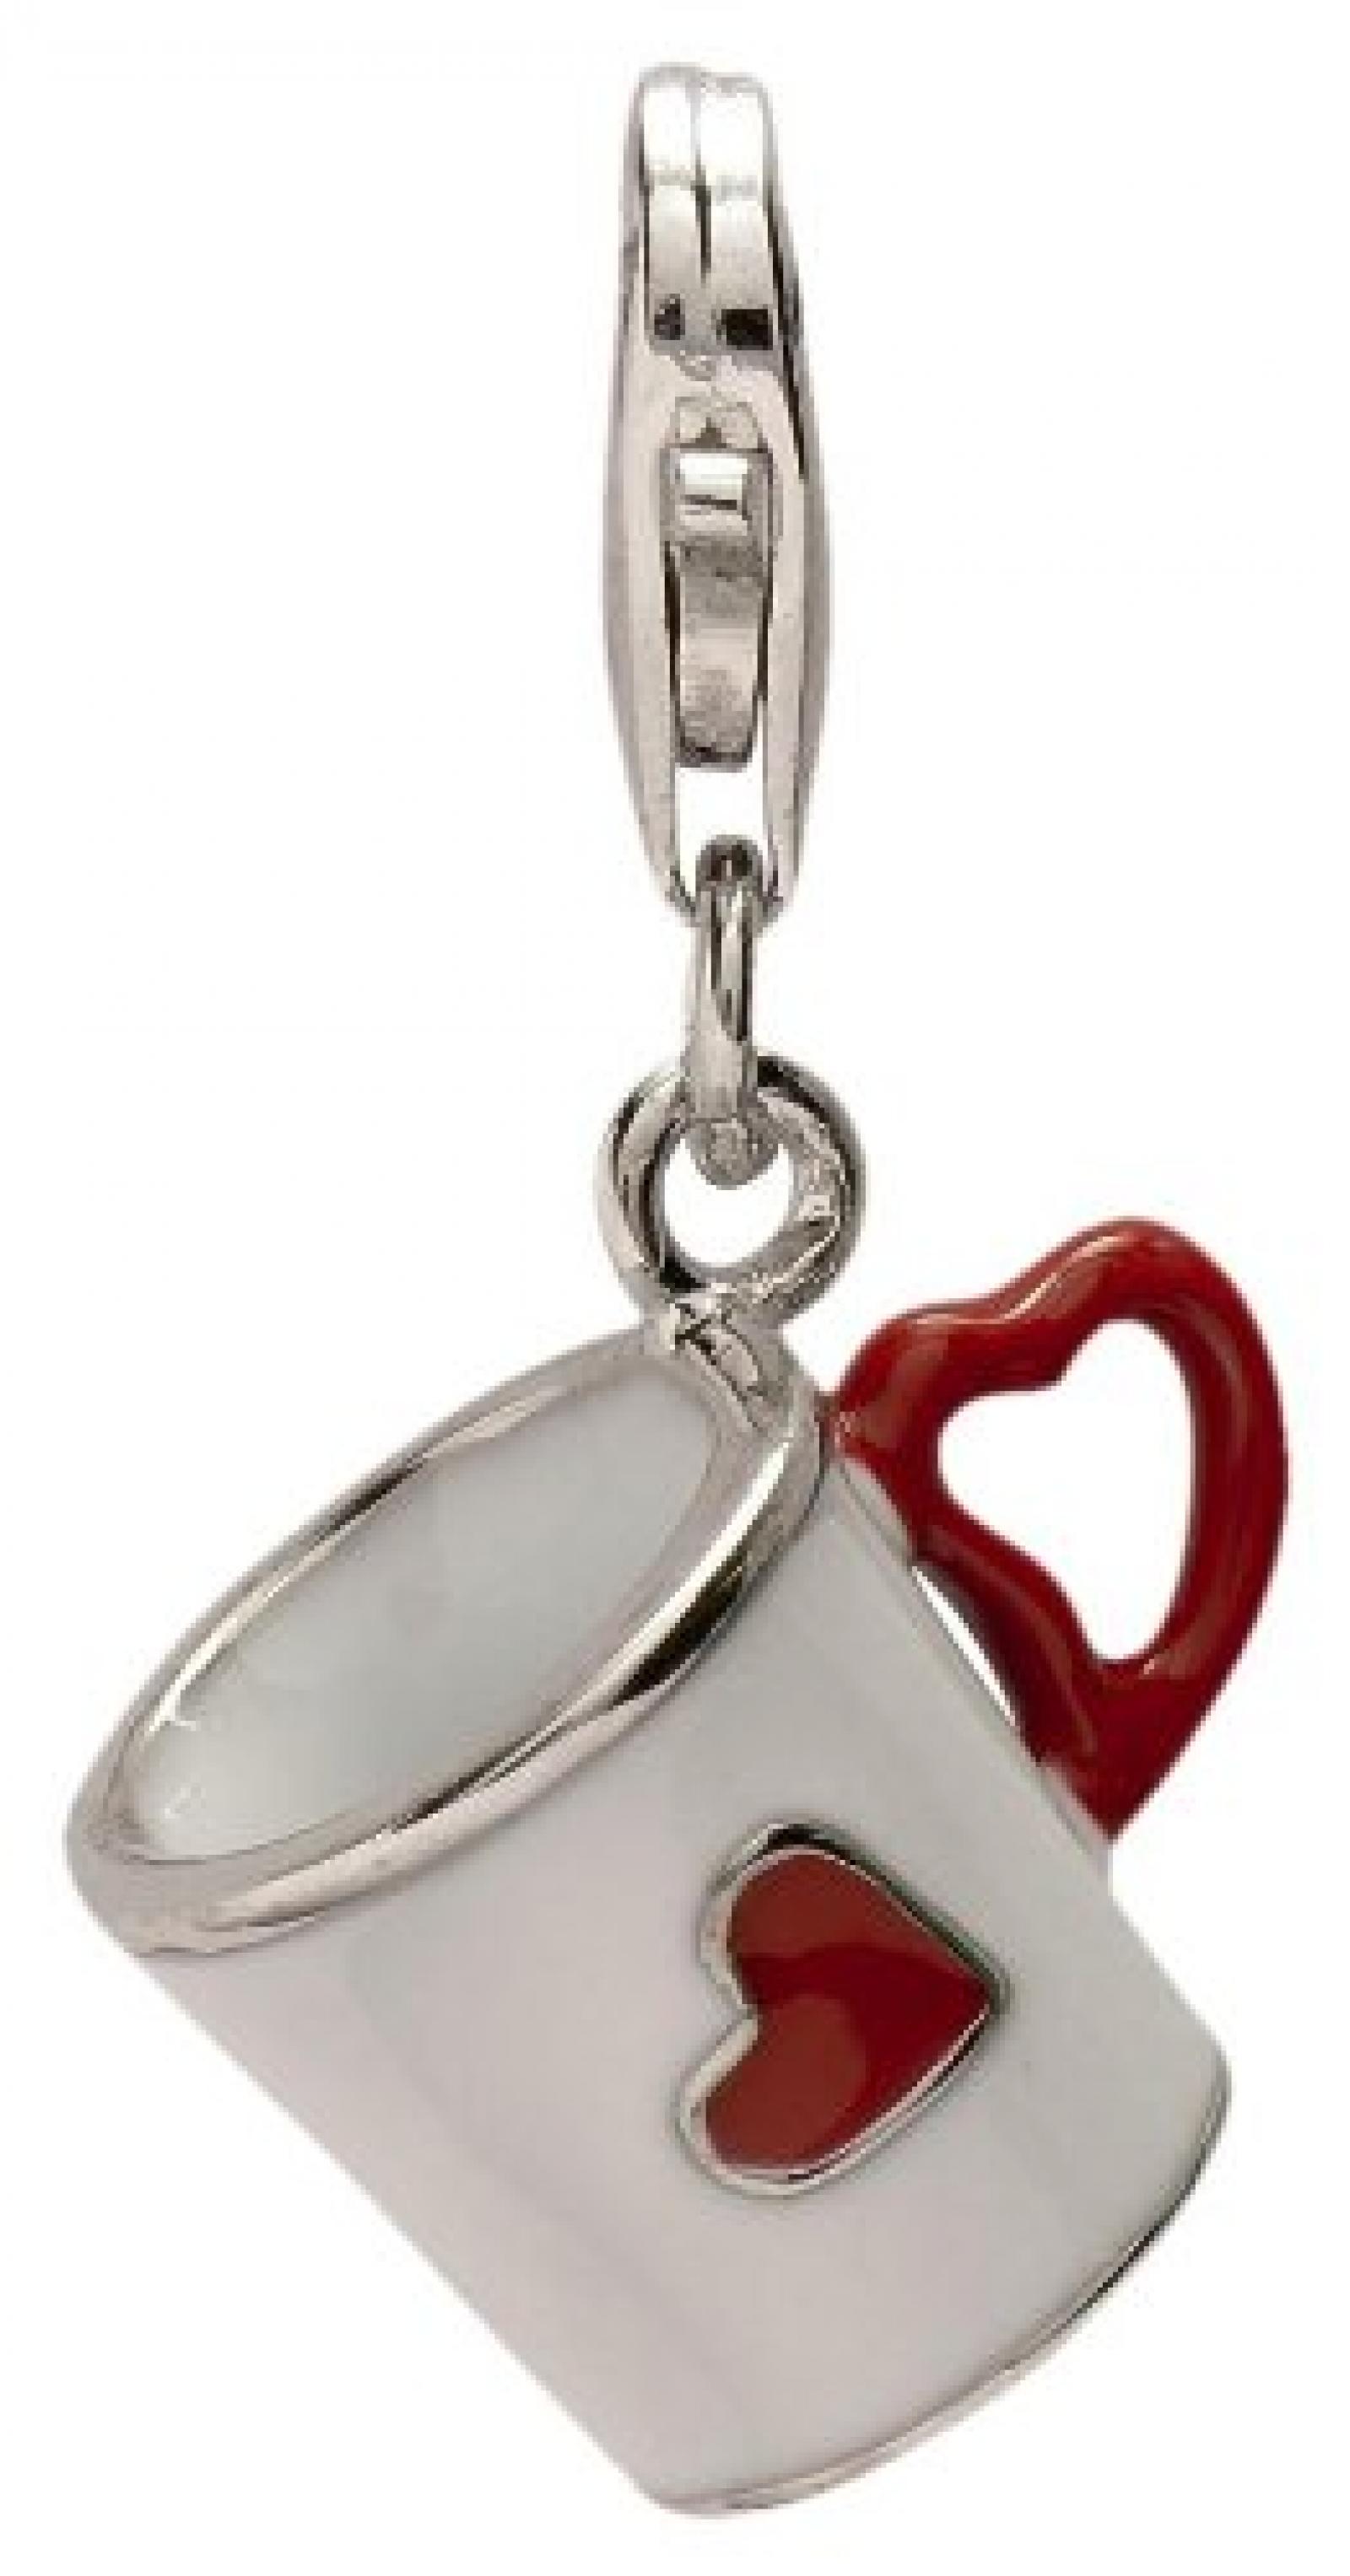 Rafaela Donata Charm Collection Damen-Charm Kaffeetasse 925 Sterling Silber Emaille weiß / rot  60602074 